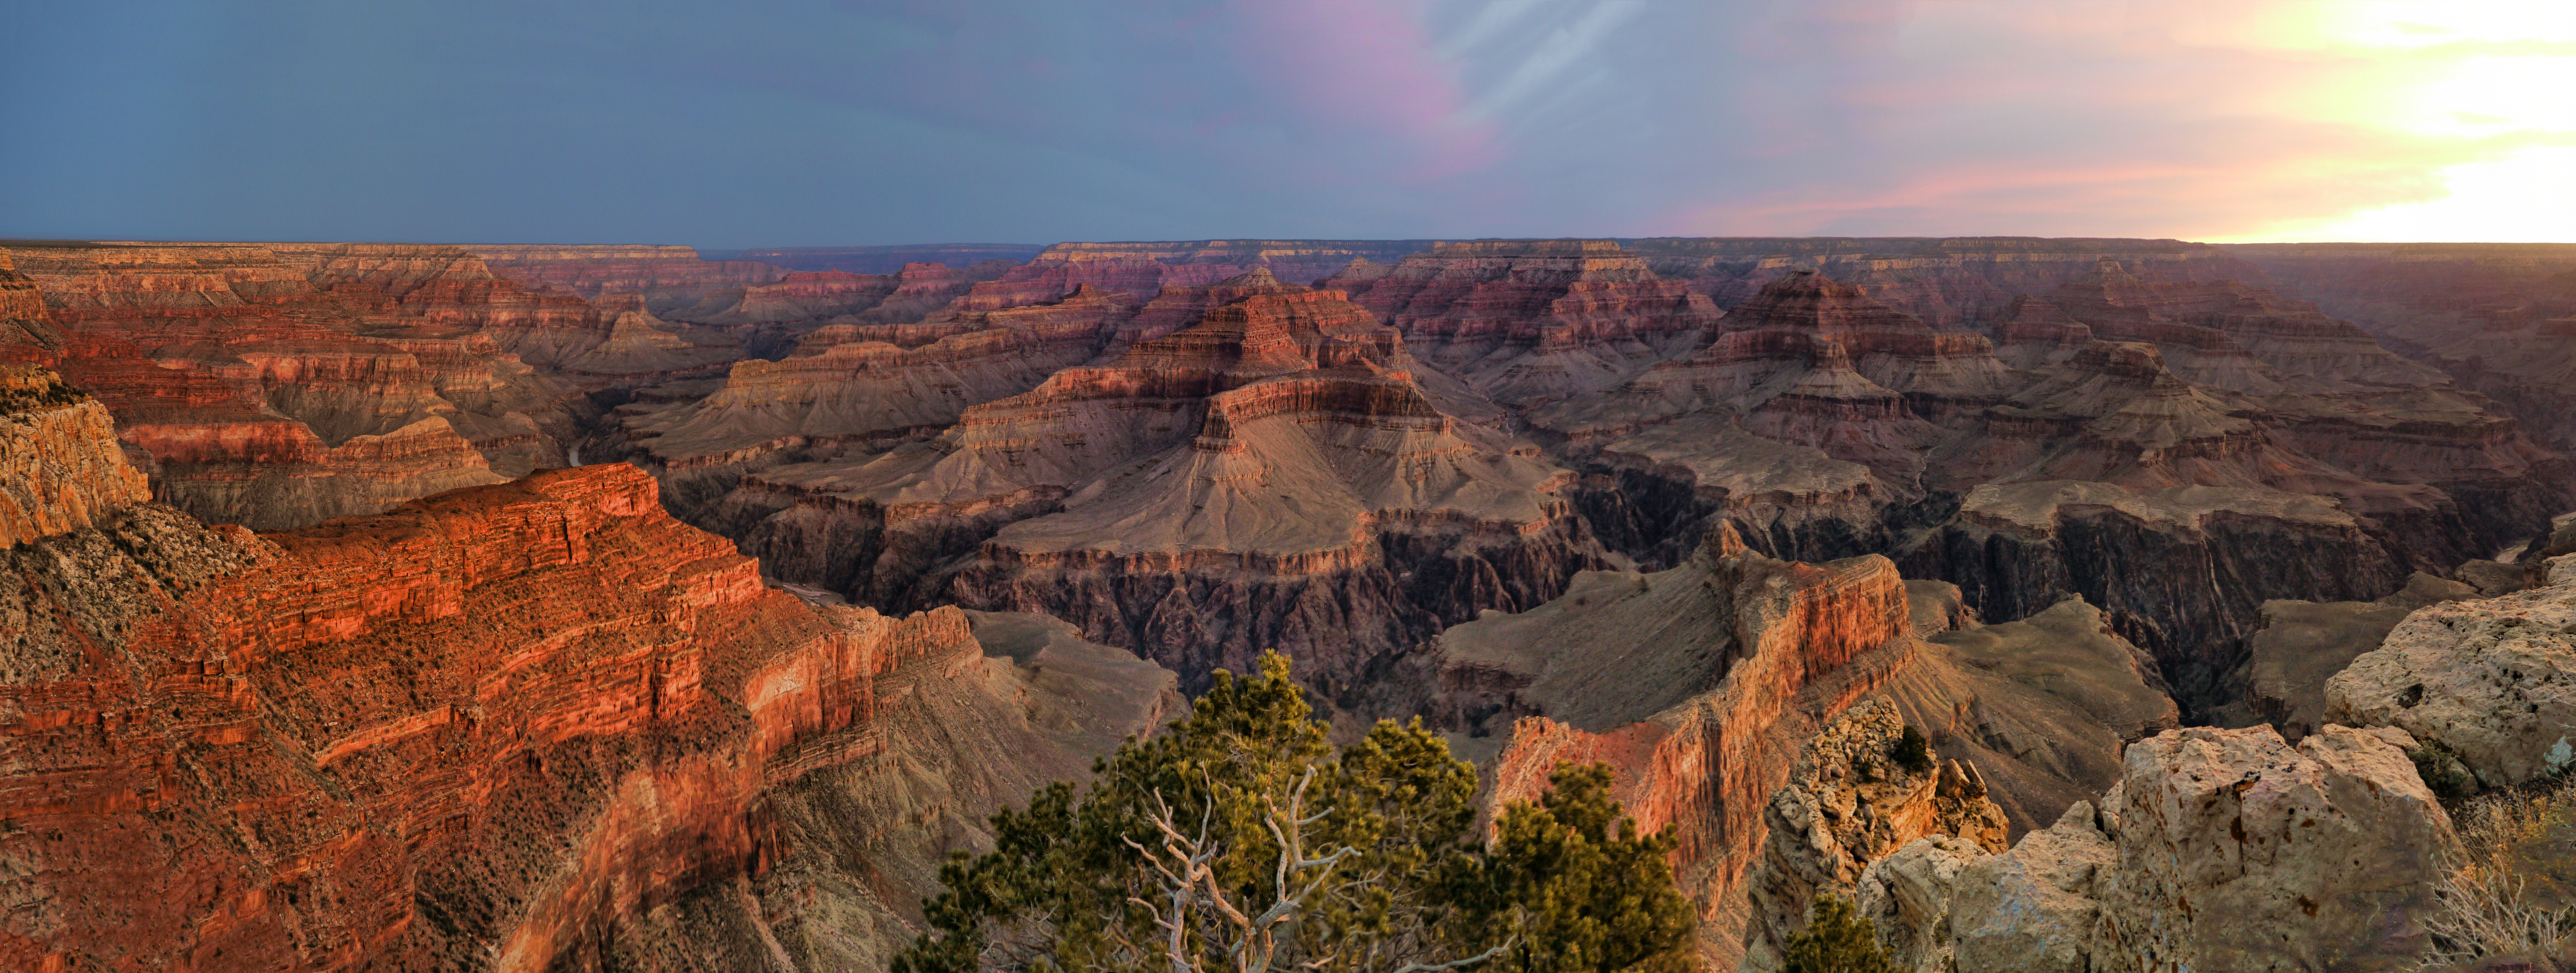 File:1 grand canyon panorama.jpg - Wikimedia Commons